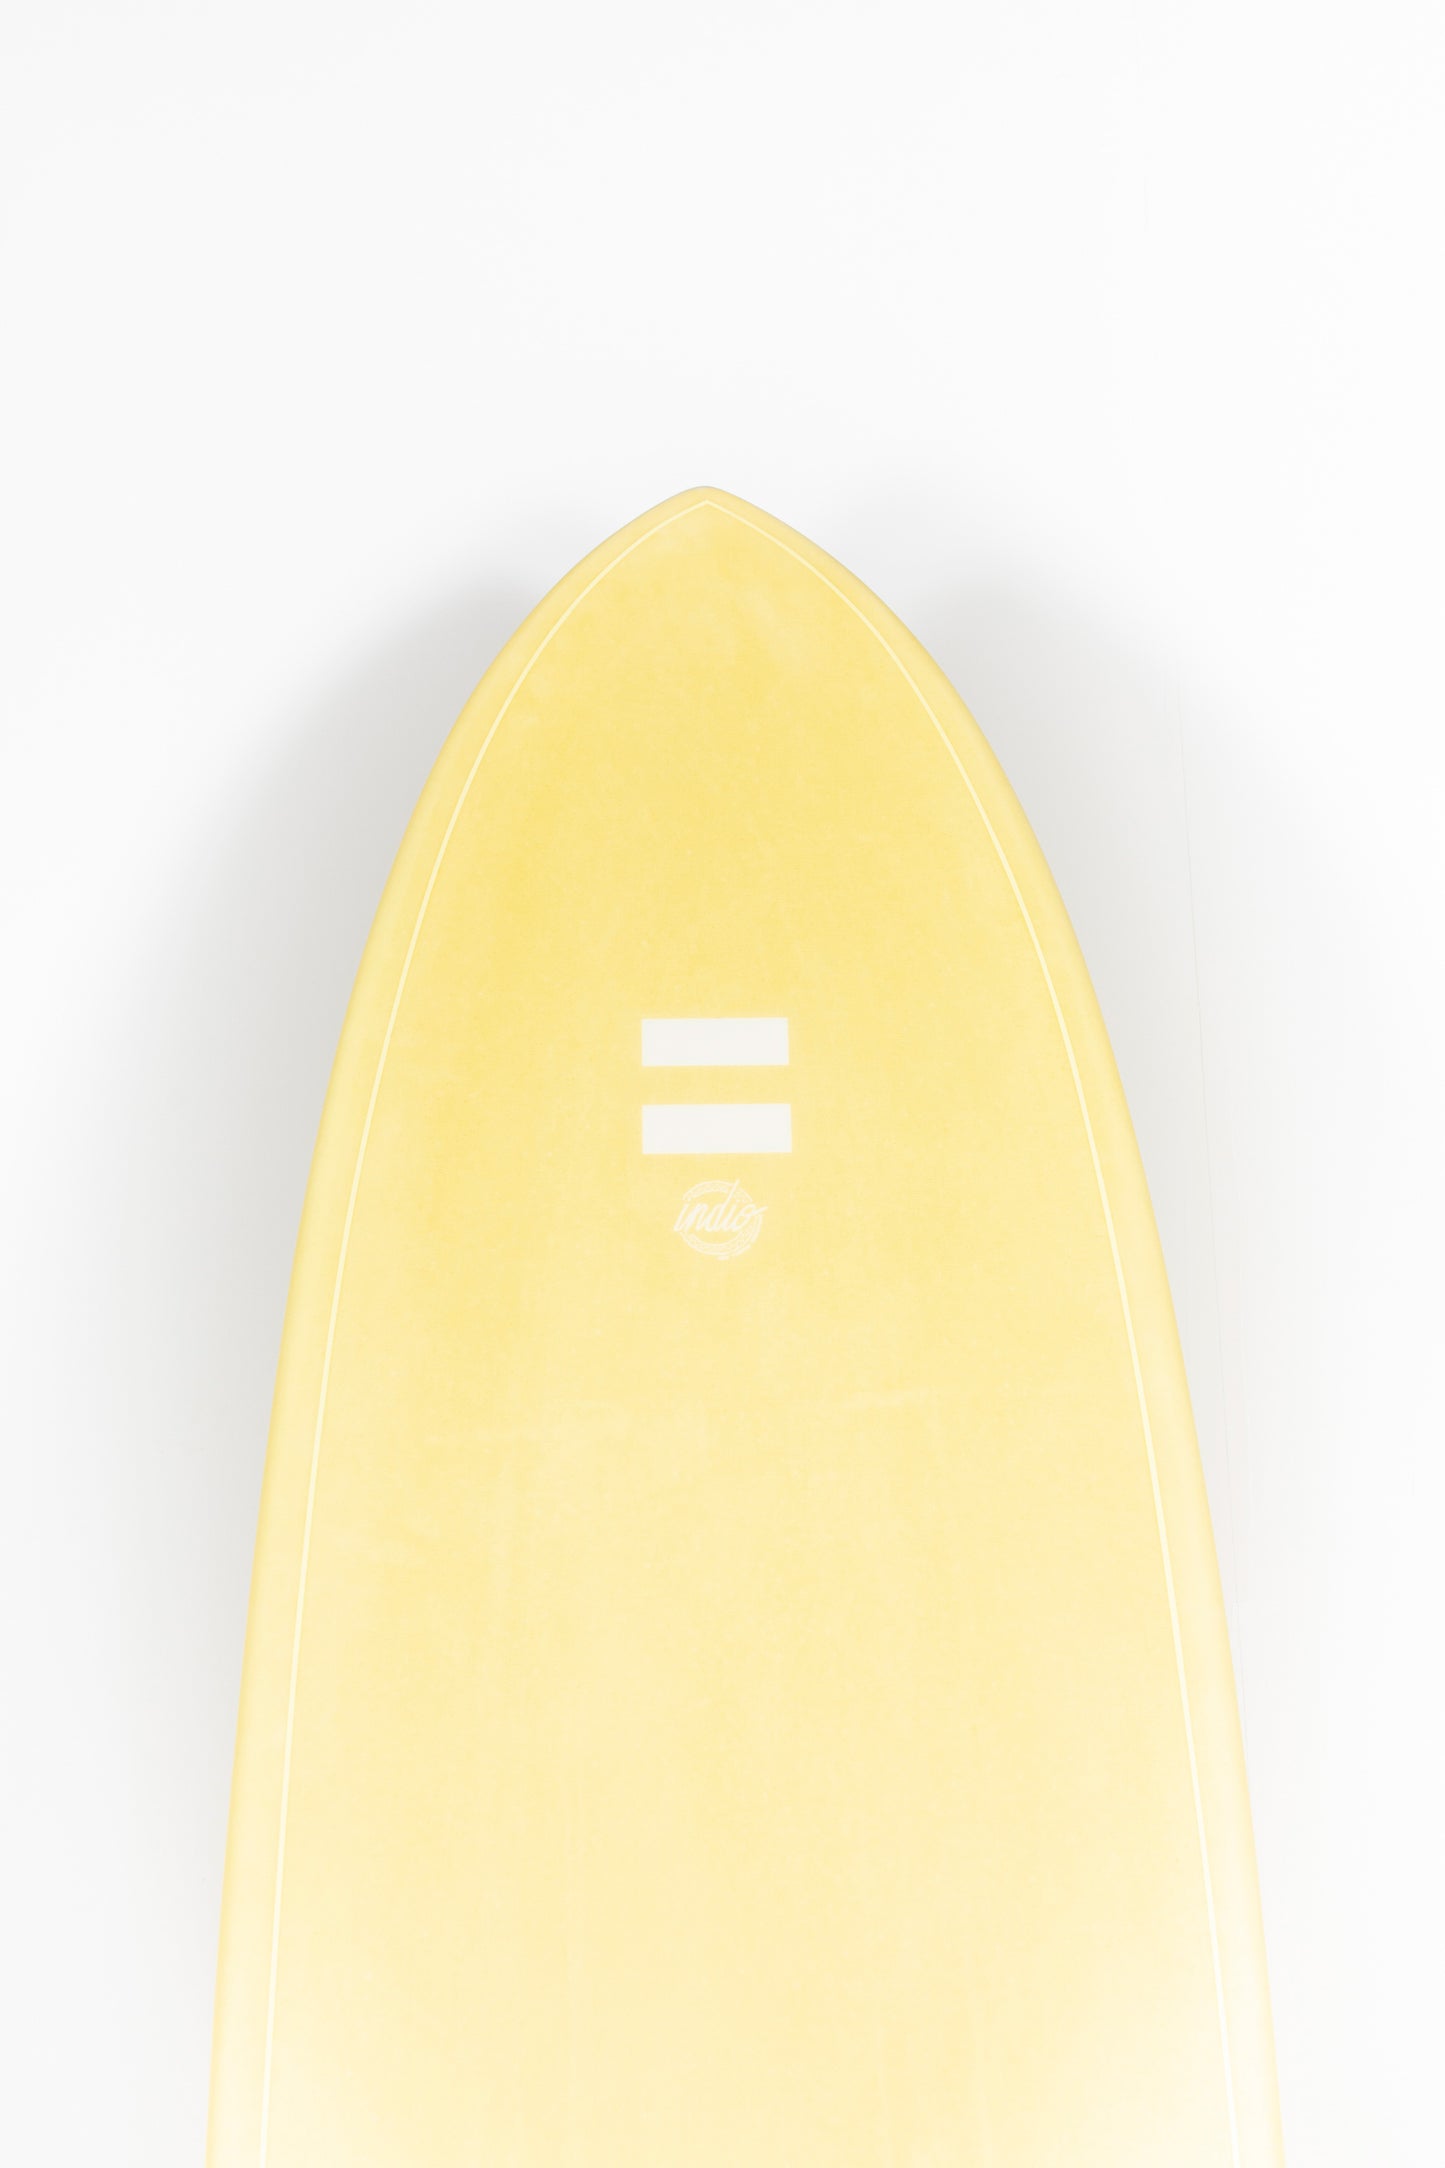 
                  
                    Pukas Surf Shop - Indio Endurance - BIG FISH Sand - 7´2 x 21 1/4 x 2 3/4 - 47L
                  
                